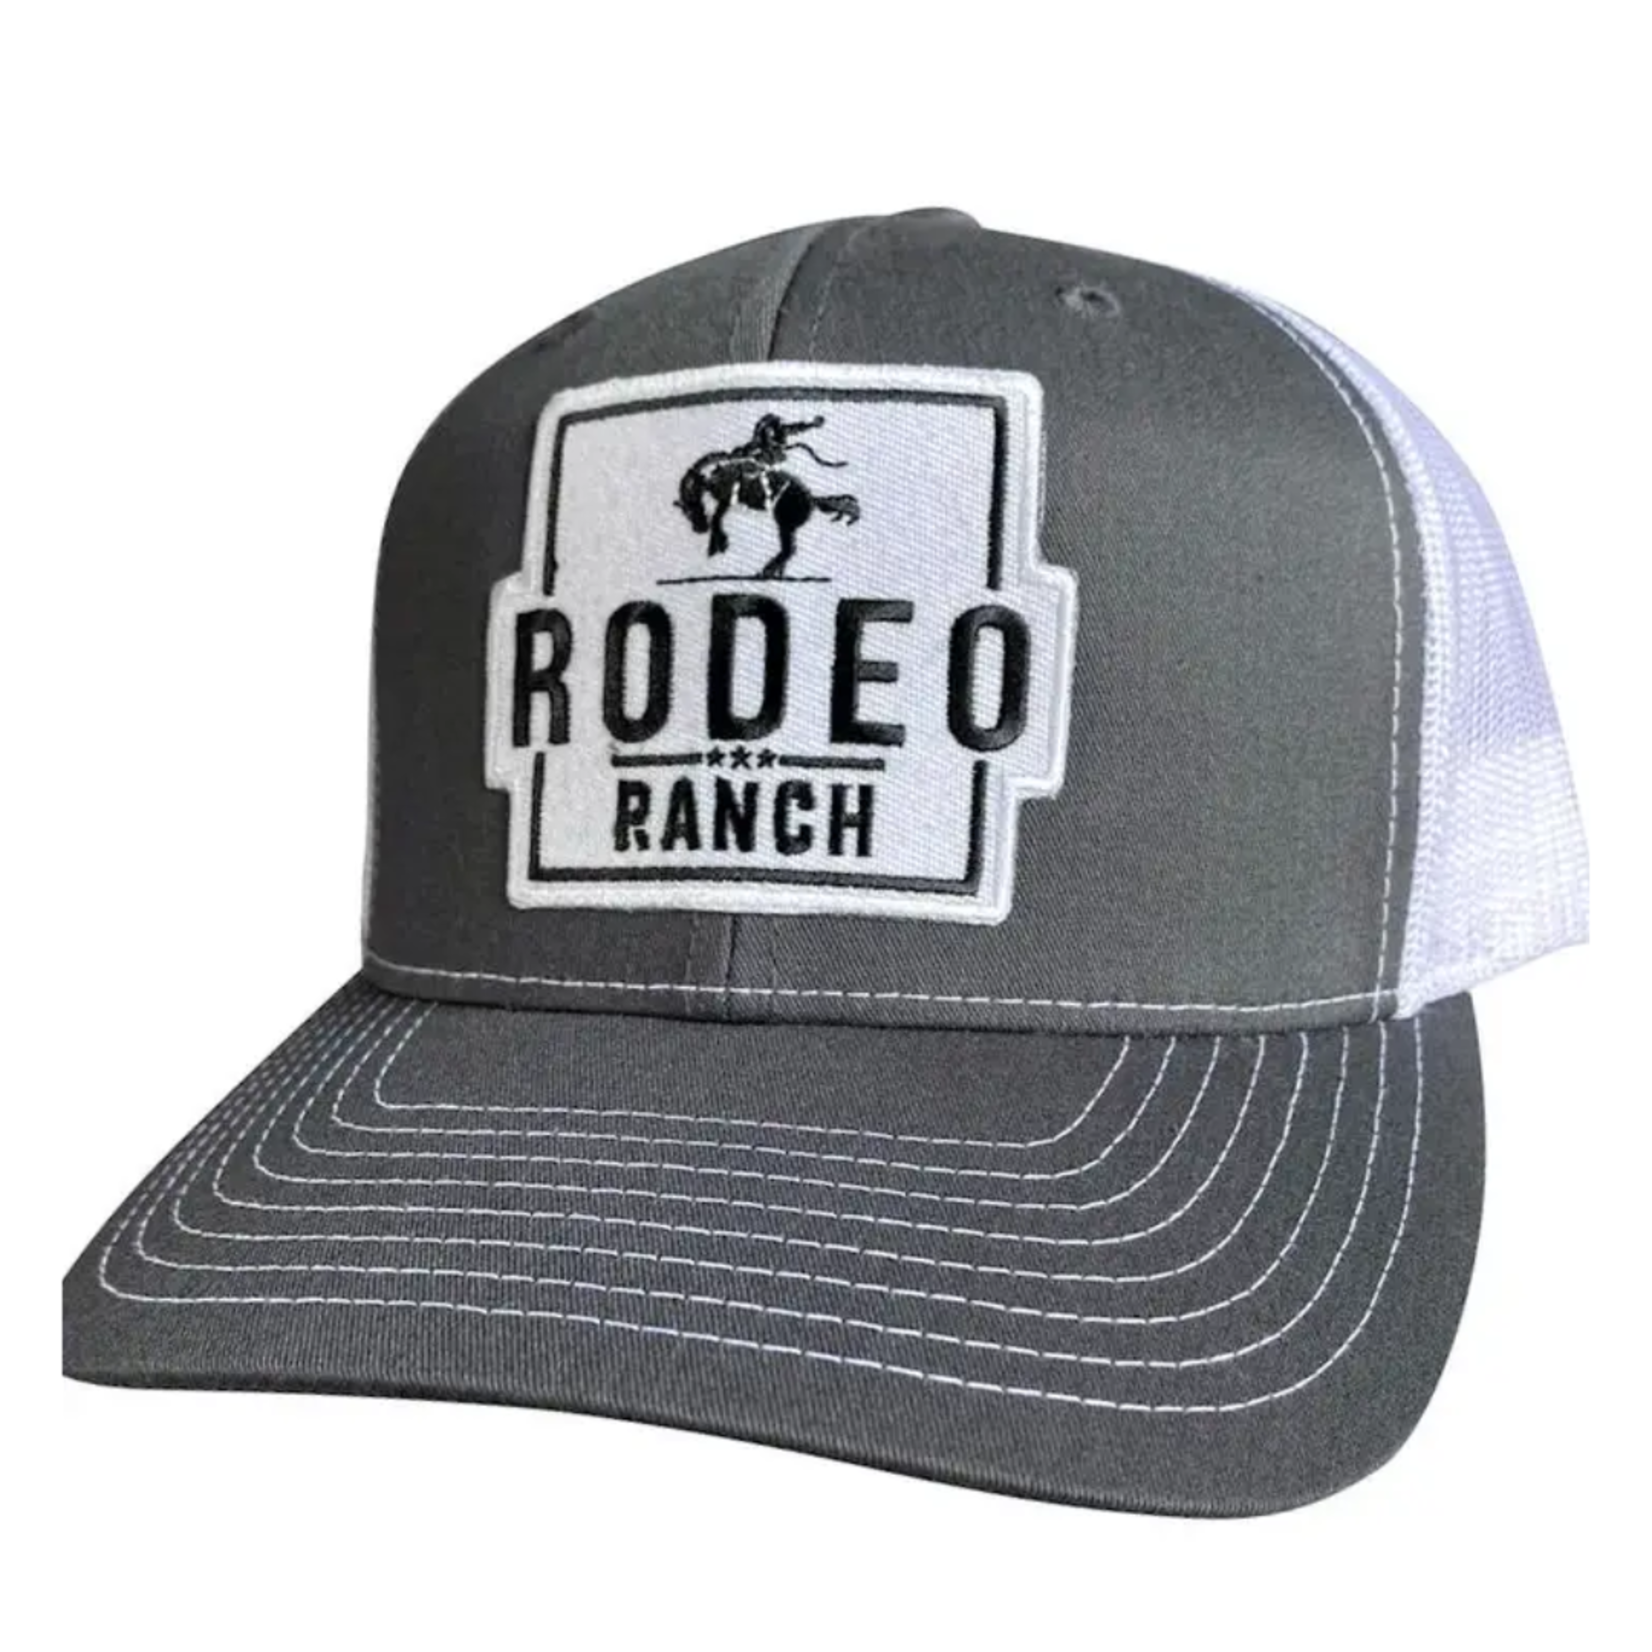 Rodeo Ranch Trucker Hat Grey & White